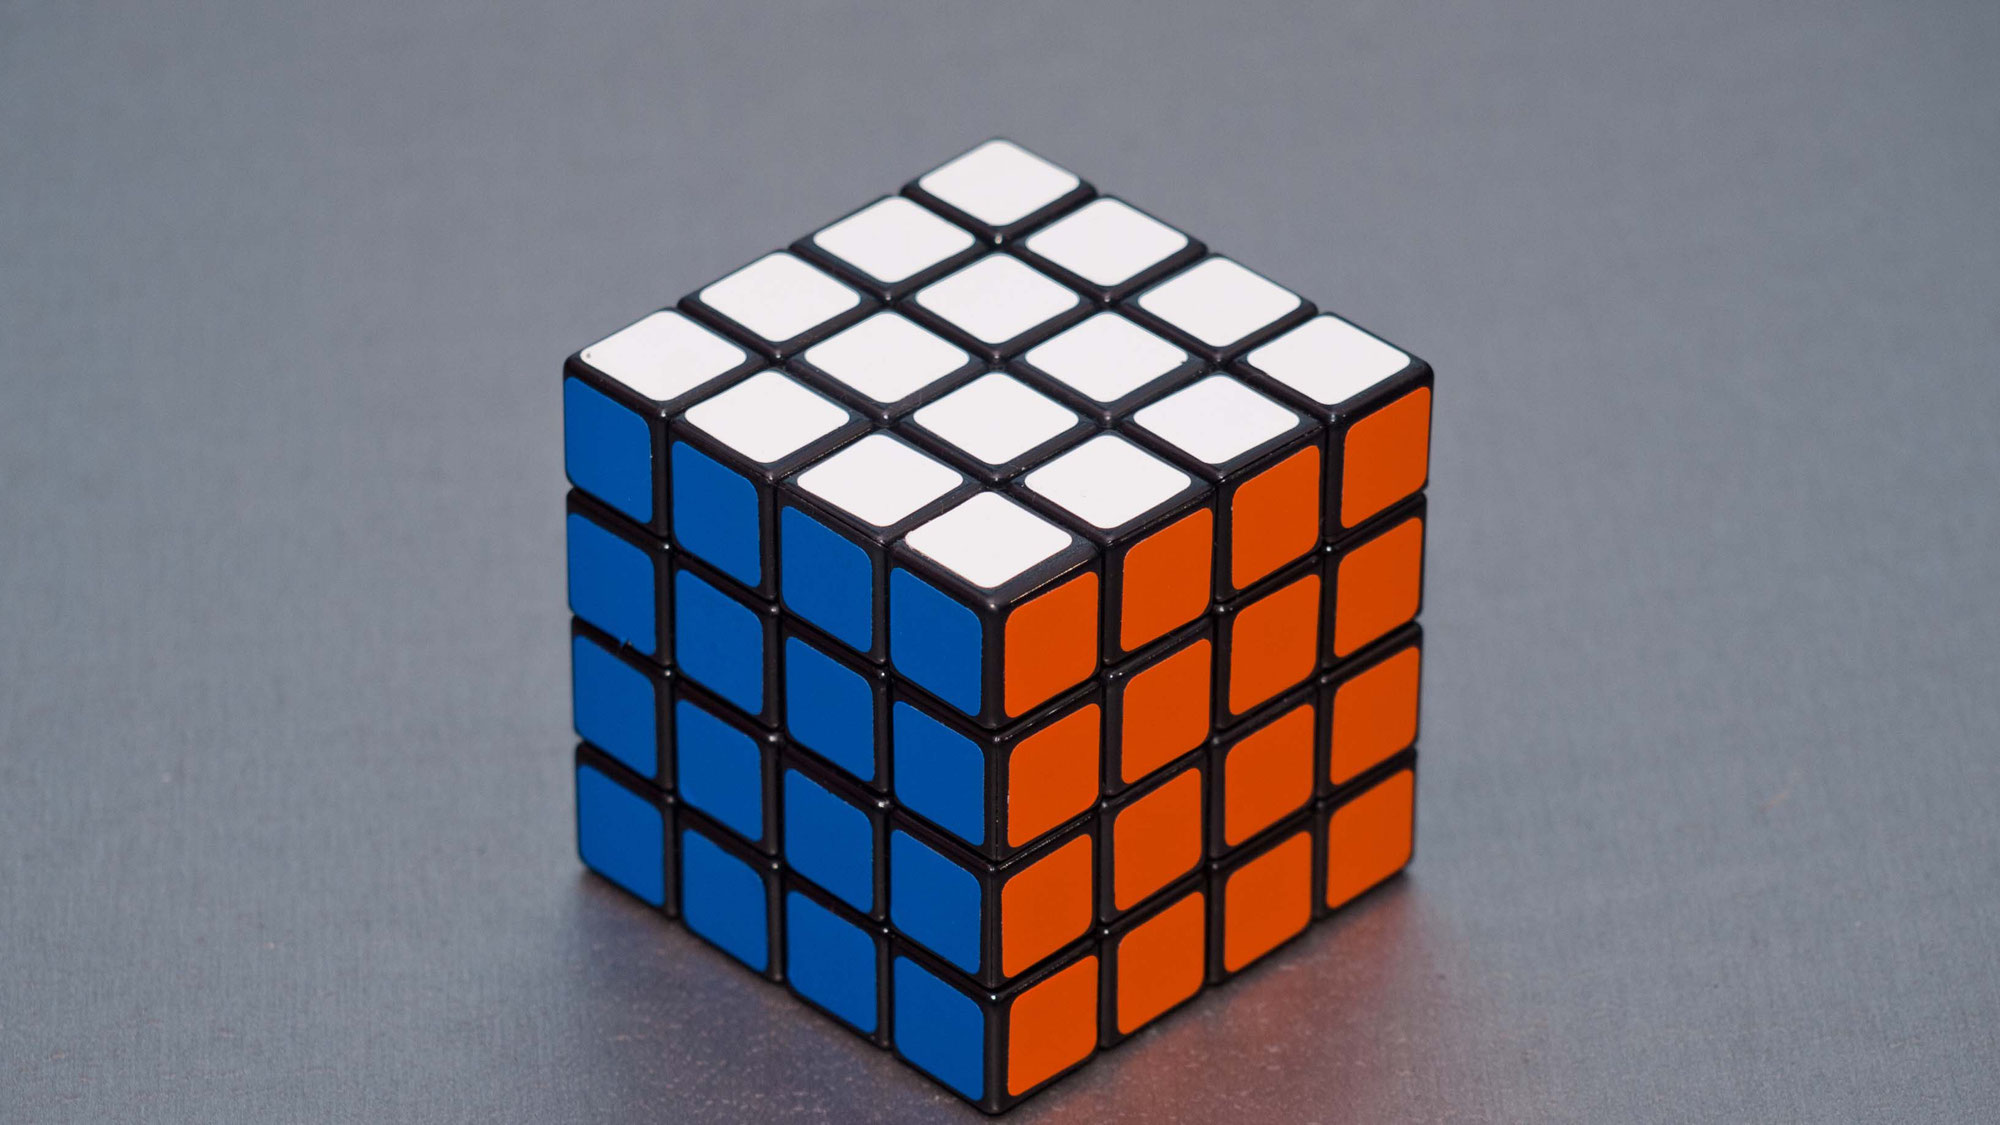 Cube solve. Кубик рубик 4х4. Кубик рубик 4 на 4. 4x4x4 Cube. Rubik's Cube 4x4.